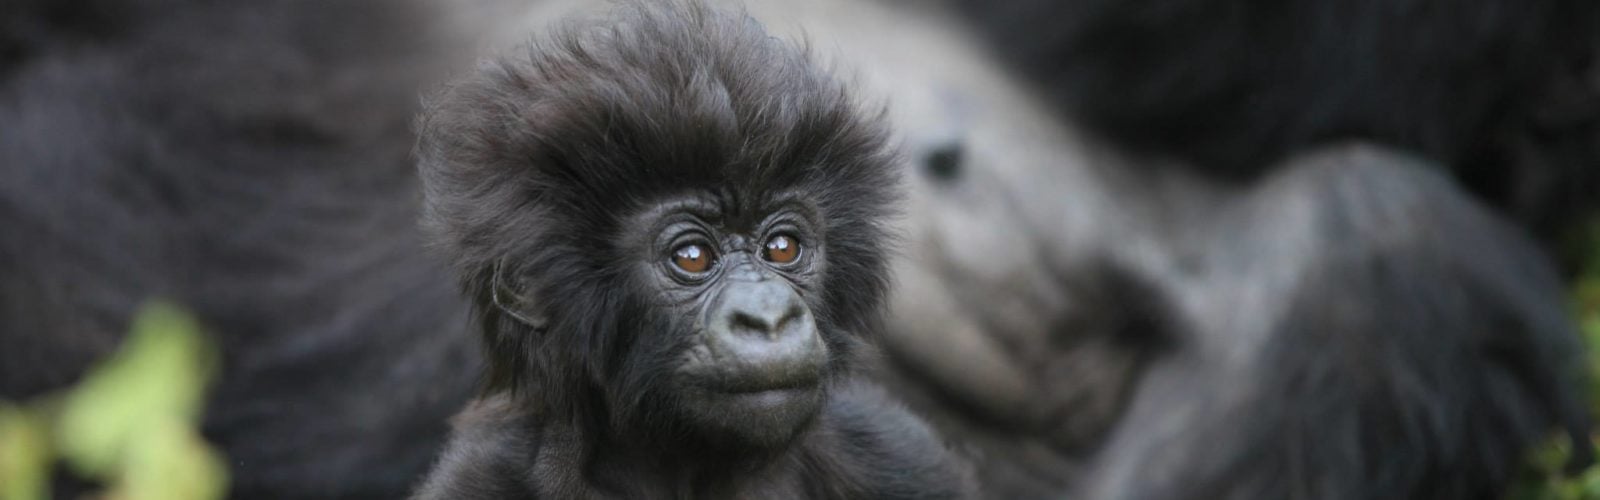 baby-gorilla-volcanoes-national-park-rwanda